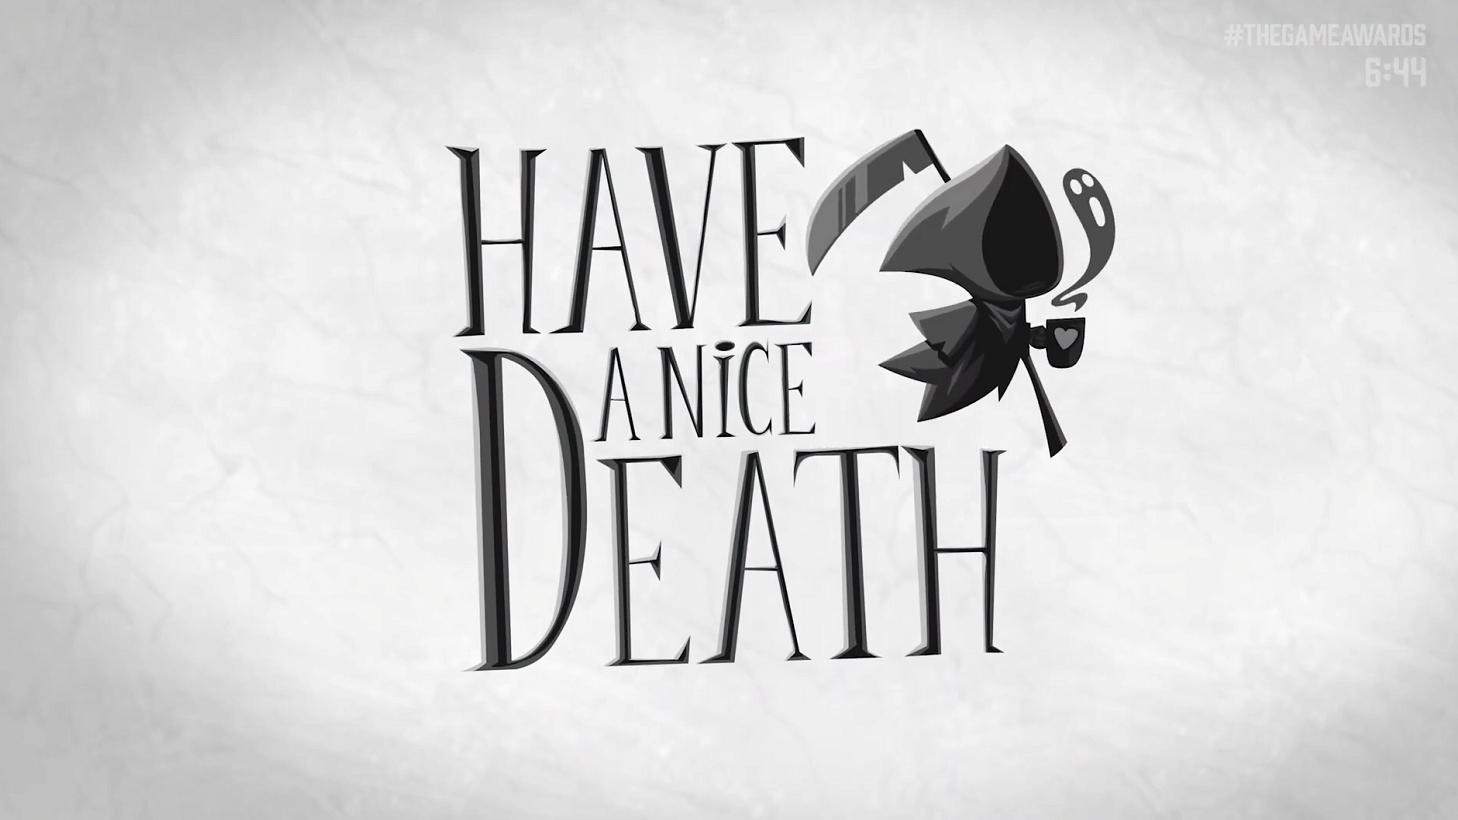 Have a nice death游戏视频